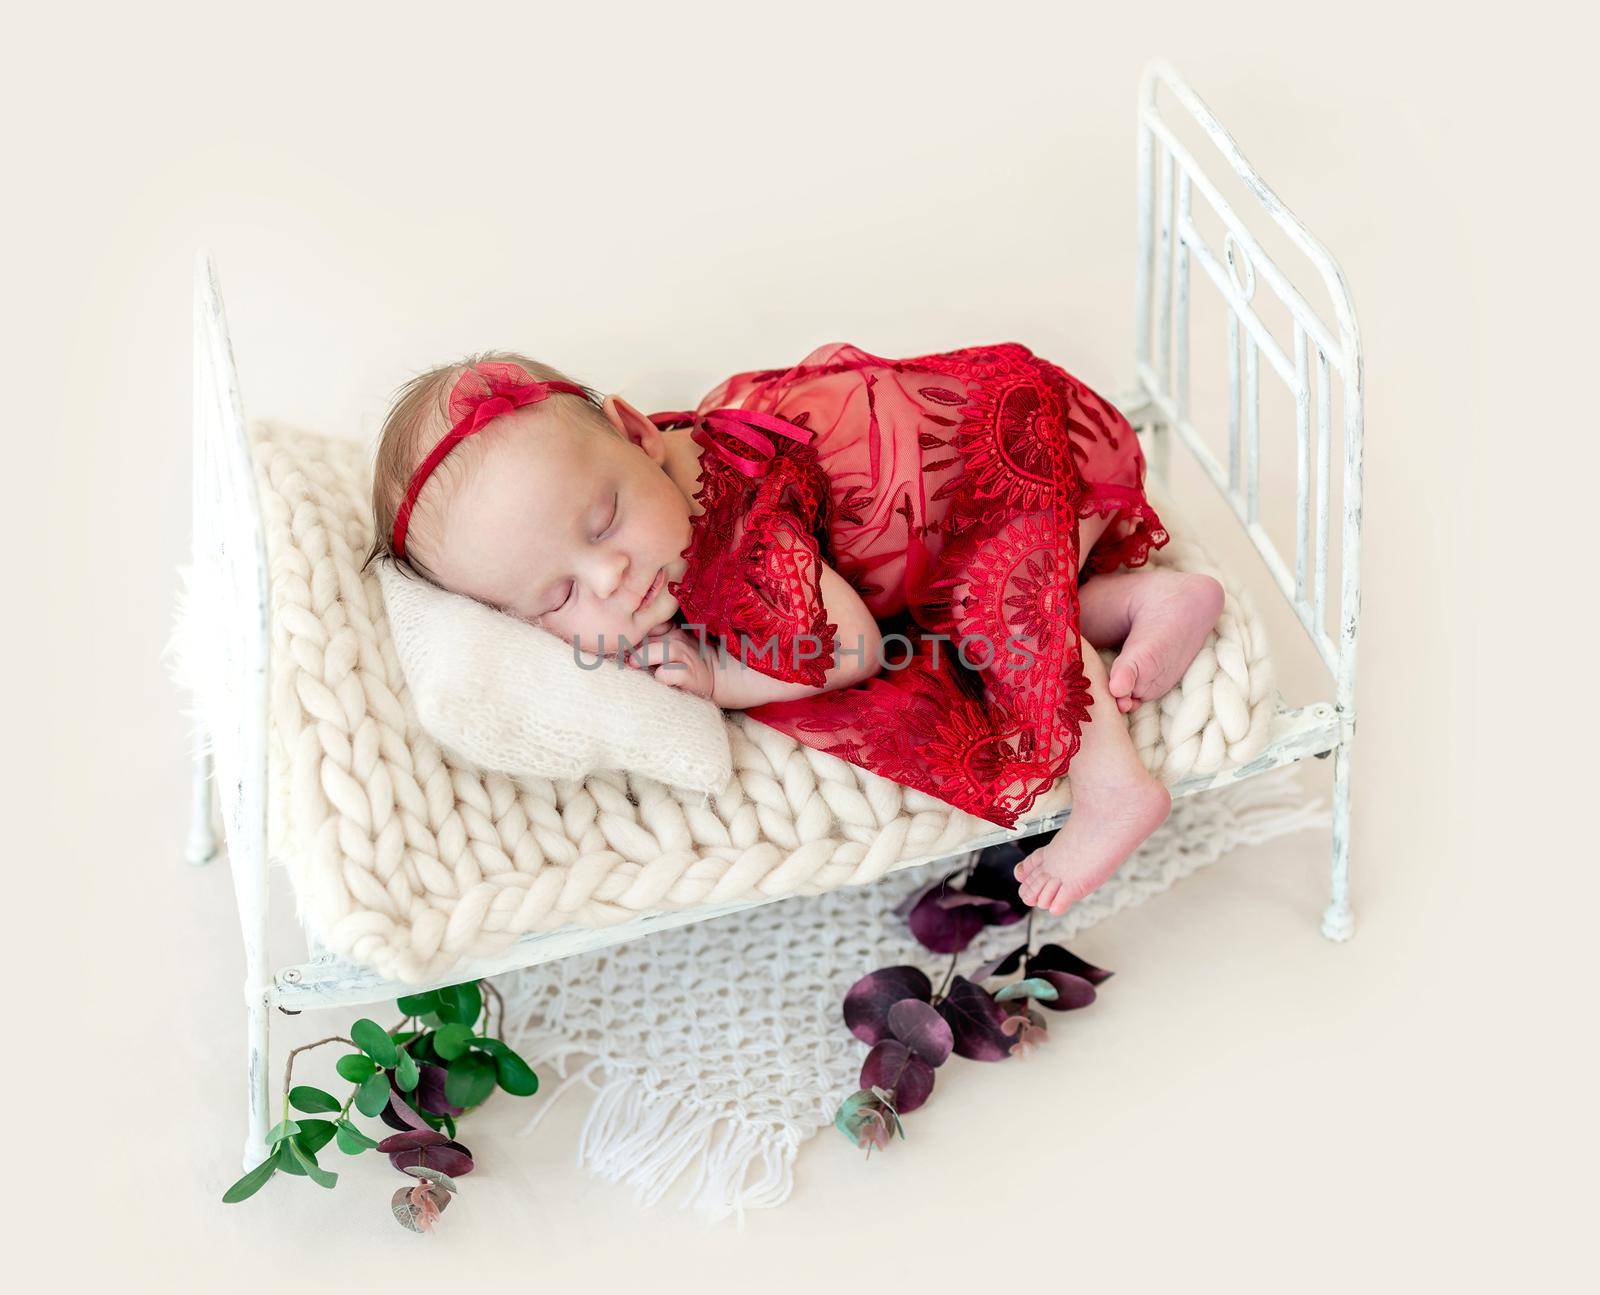 Sleeping newborn baby girl in a red dress